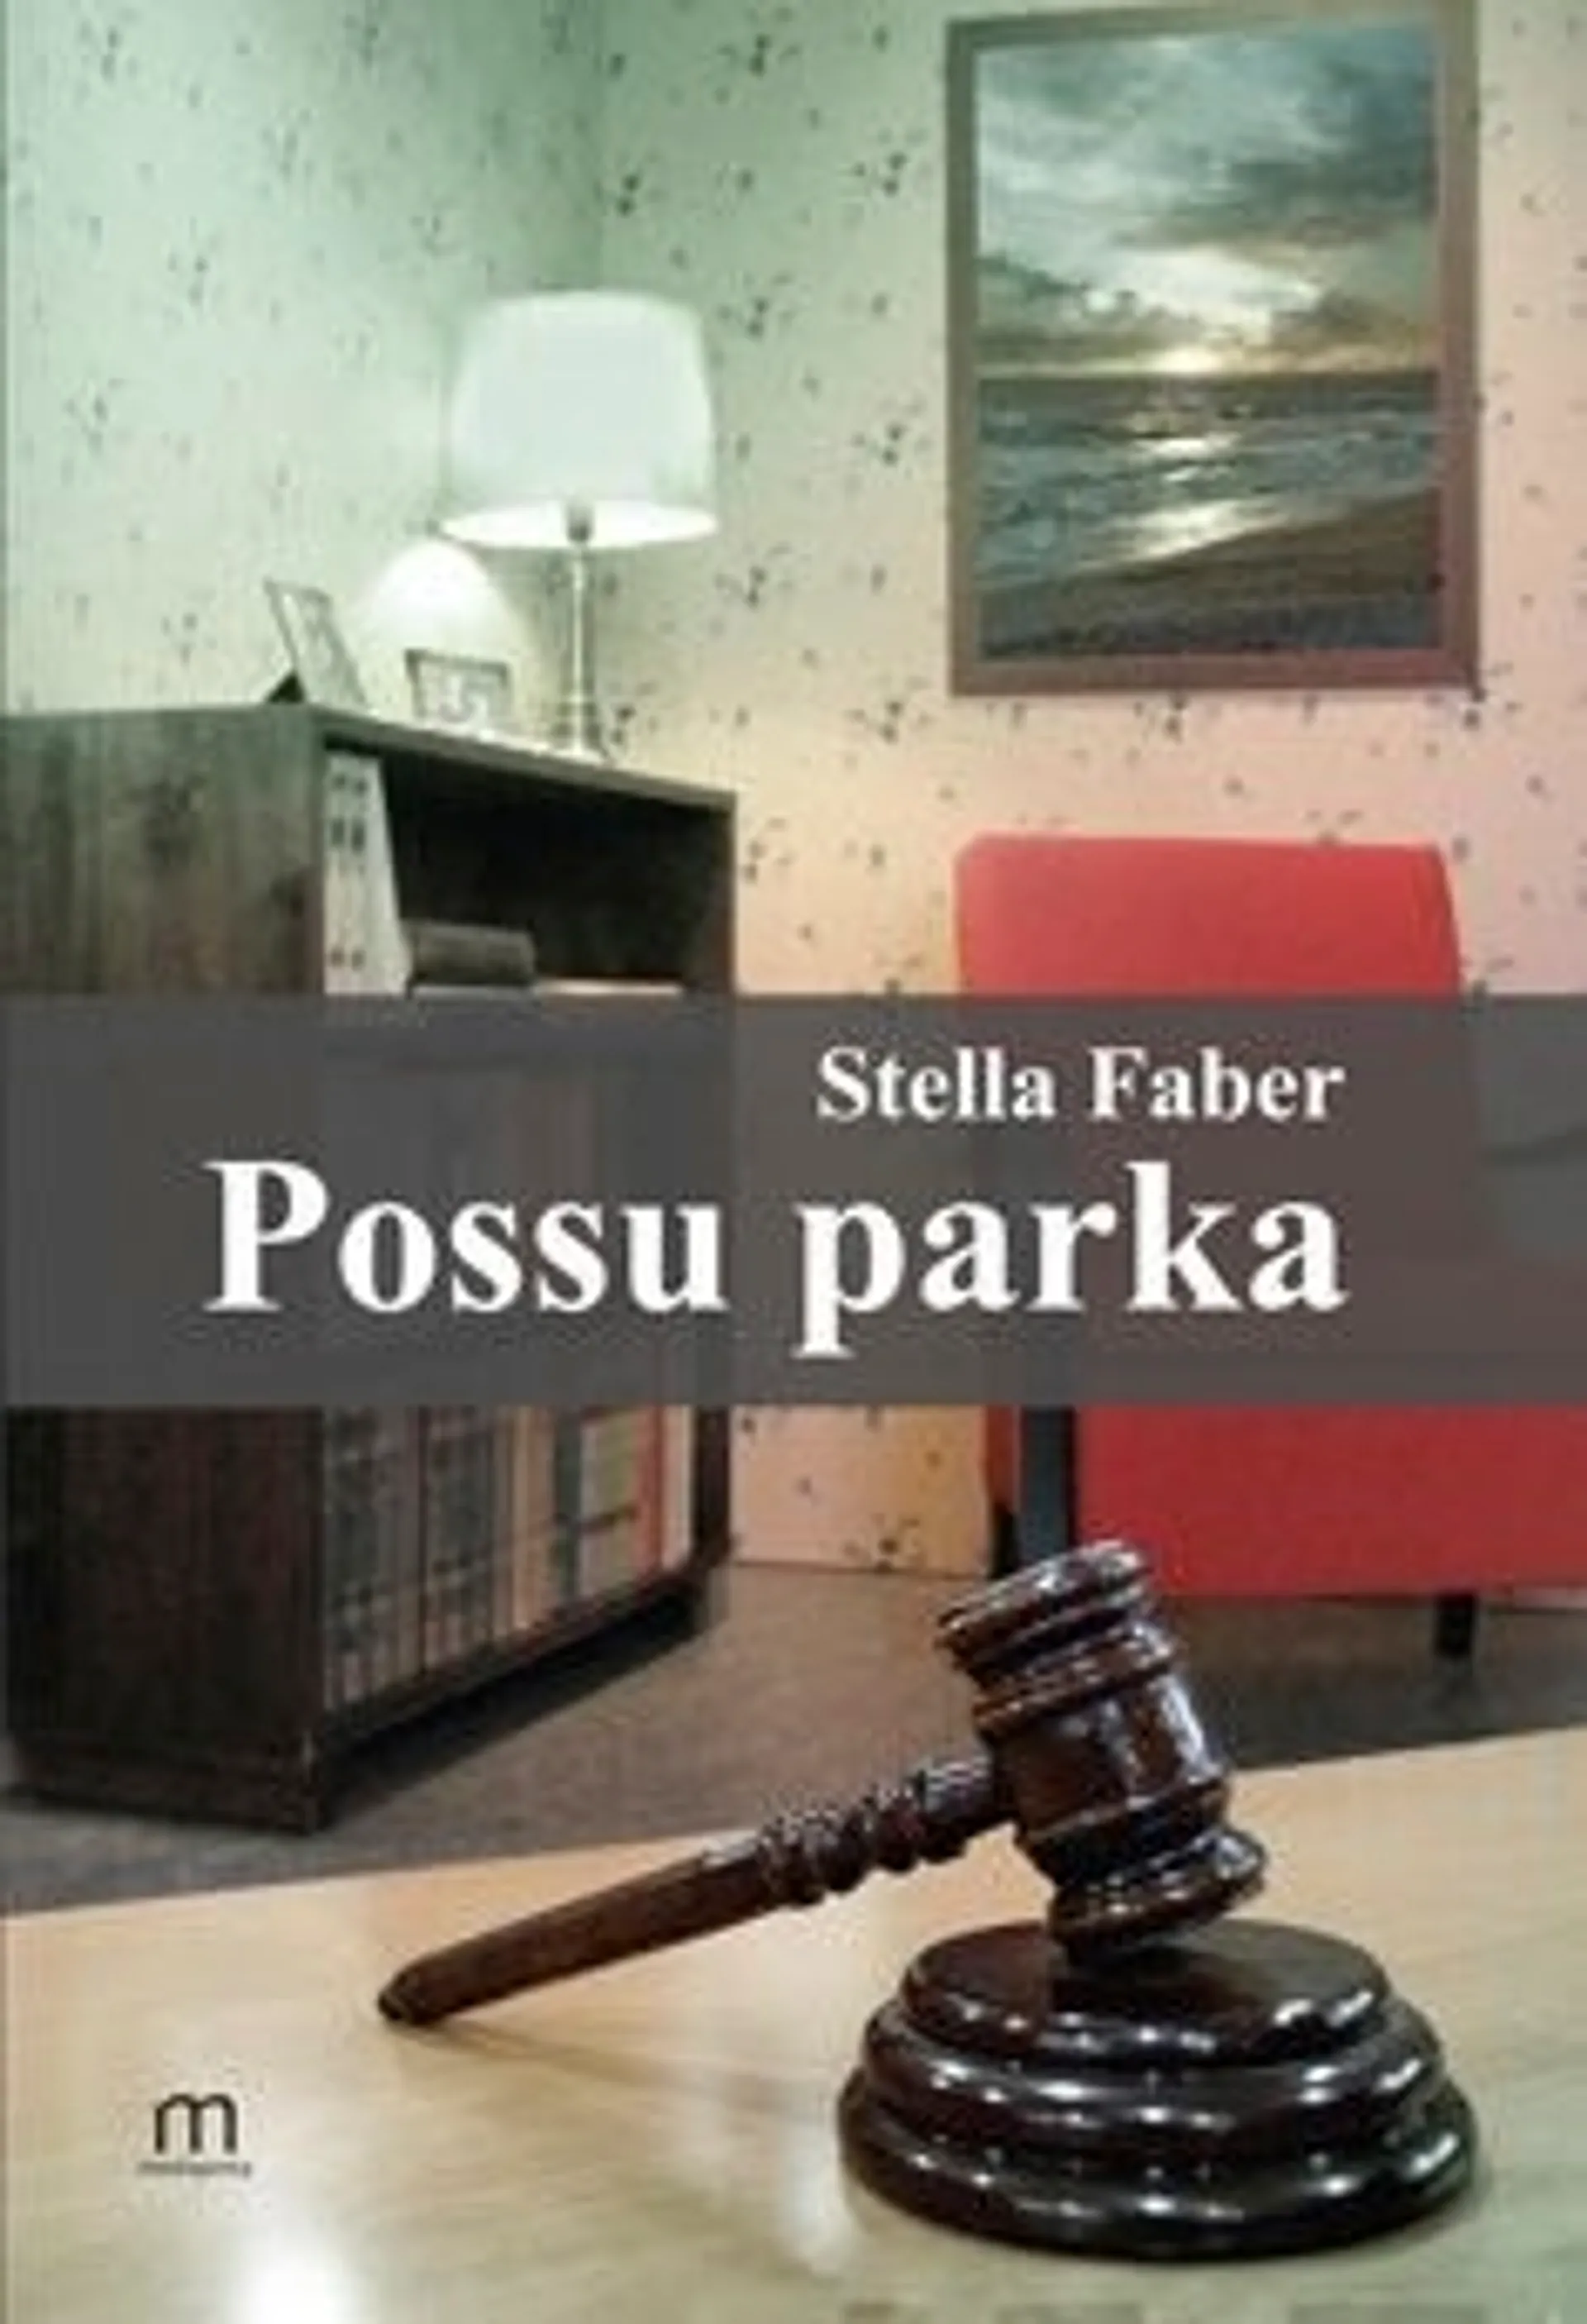 Faber, Possu parka